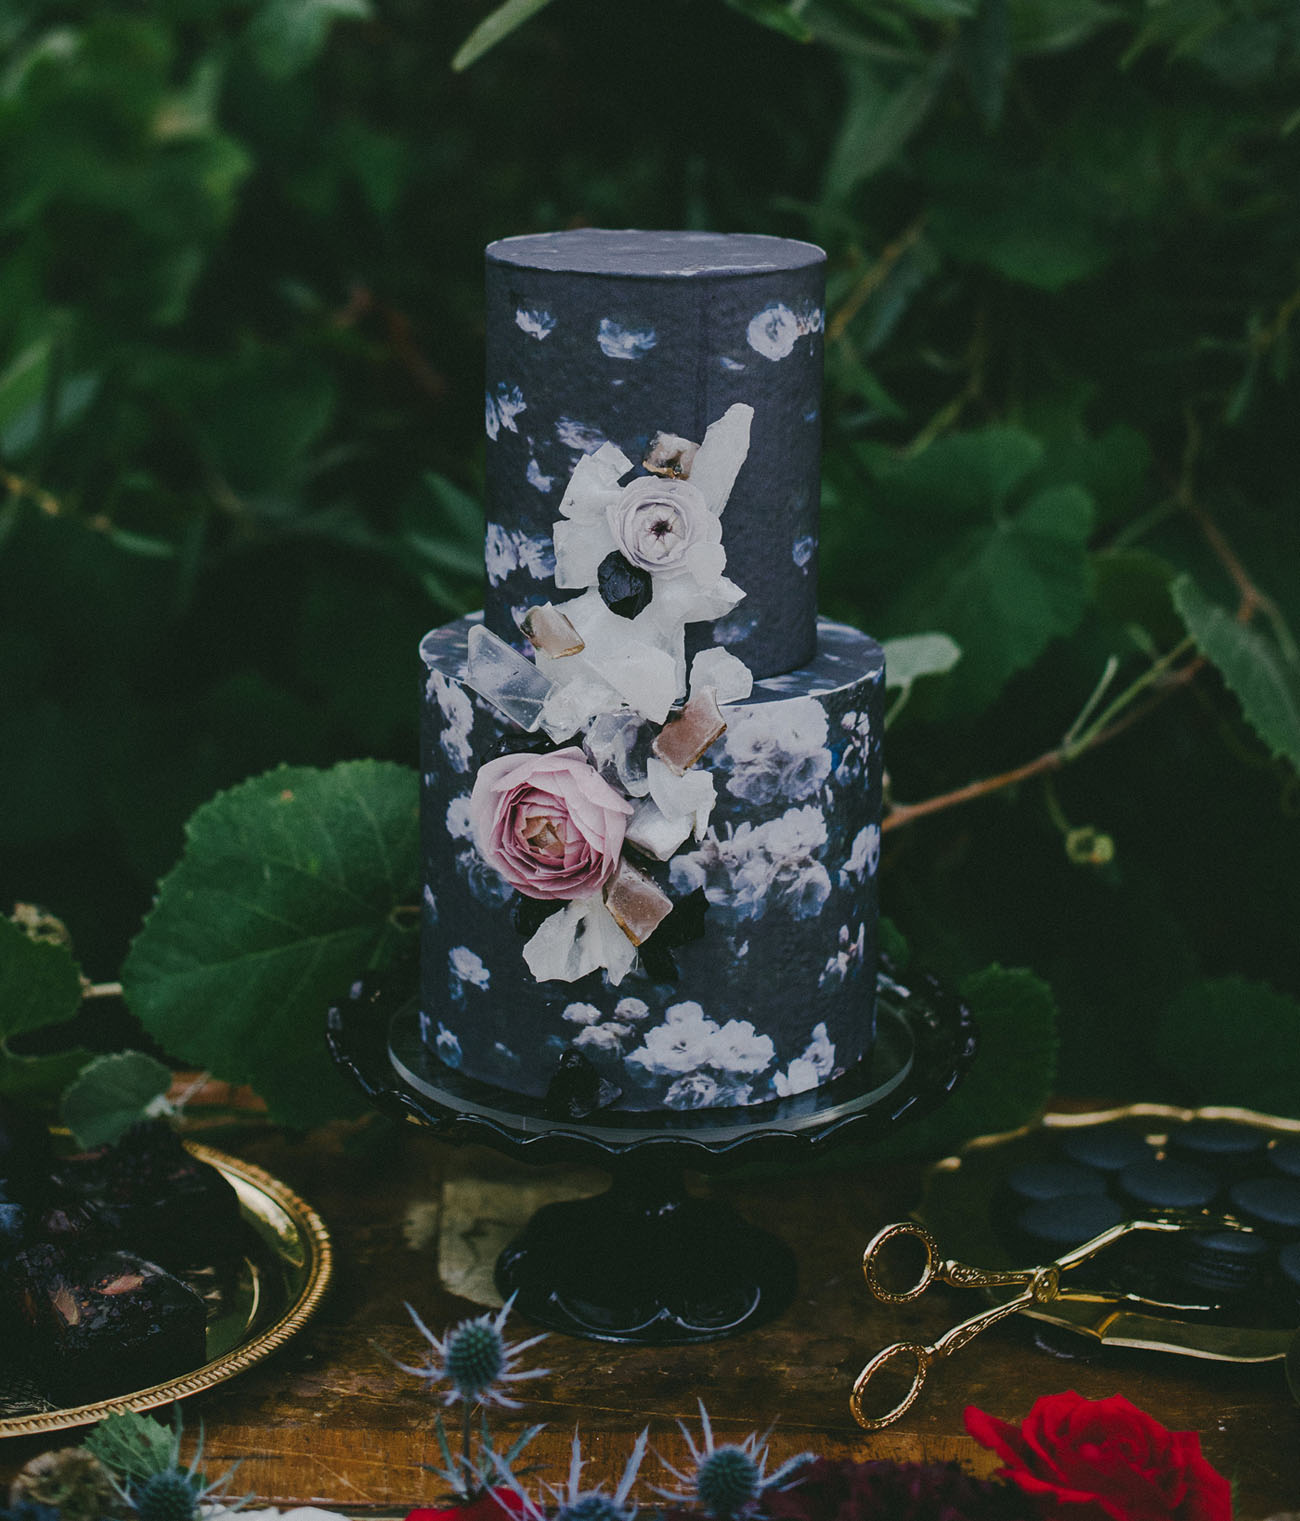 black wedding cake with flowers